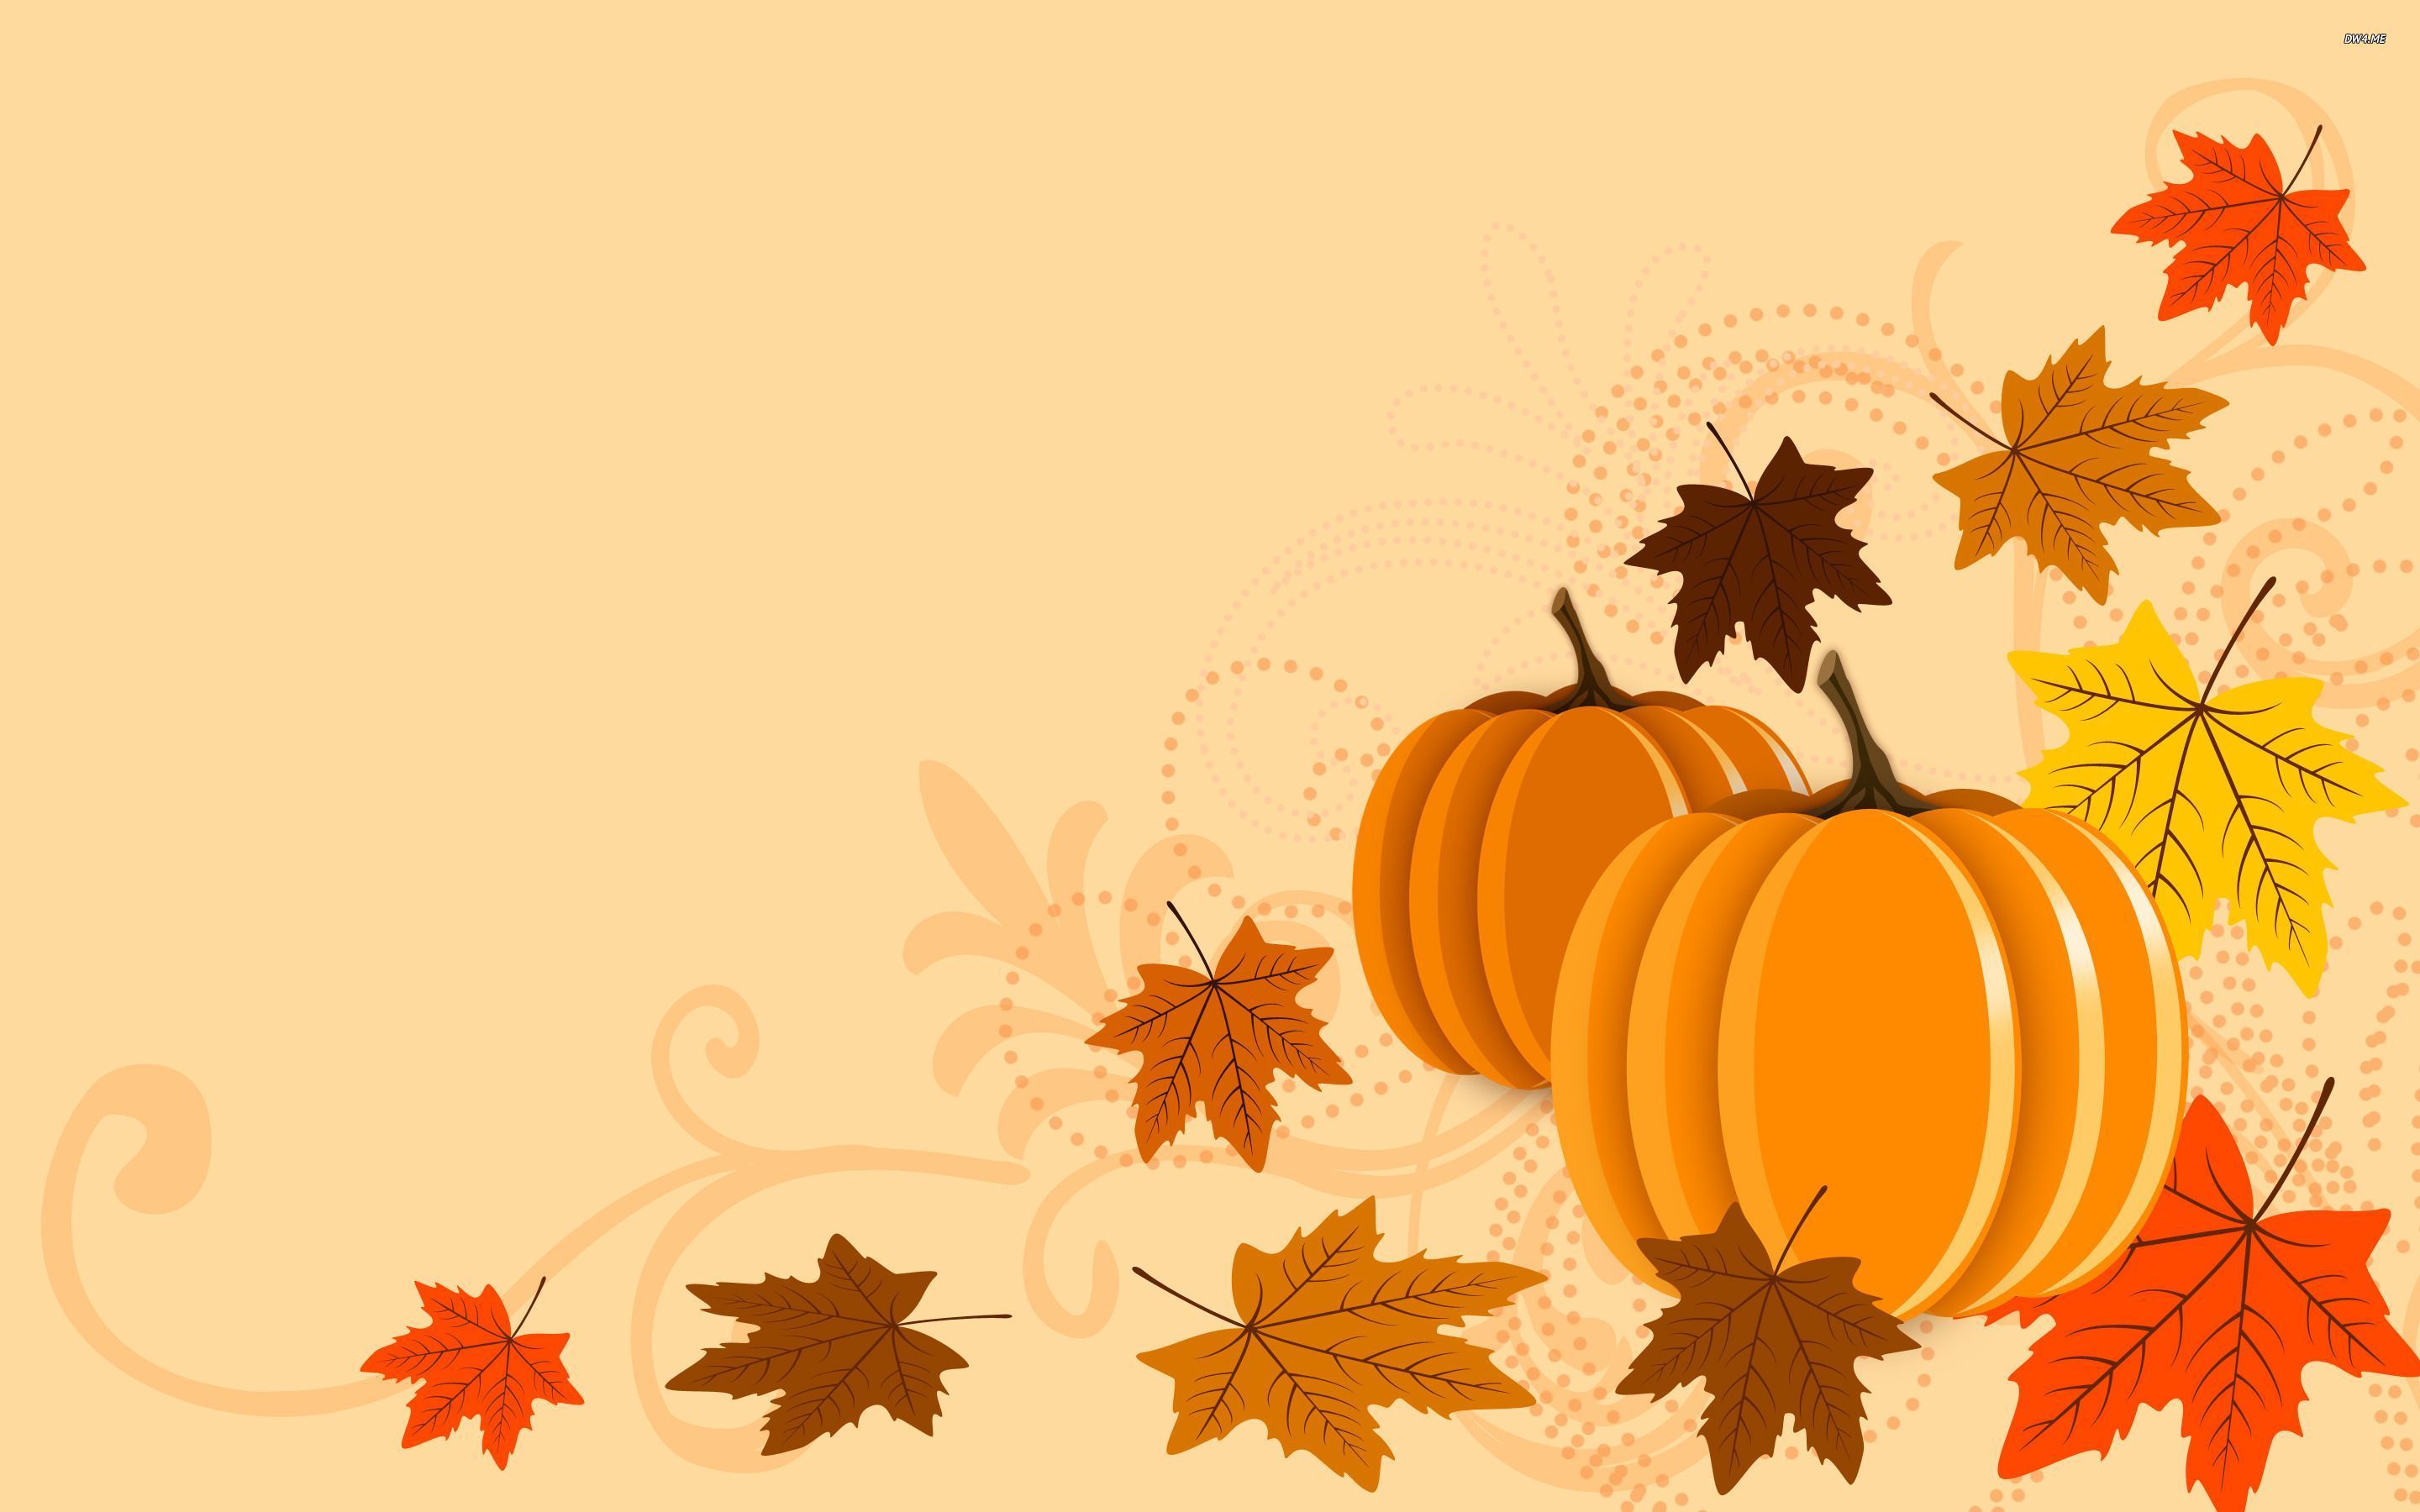 Thanksgiving wallpaper - pumpkins and autumn leaves on a beige background - Pumpkin